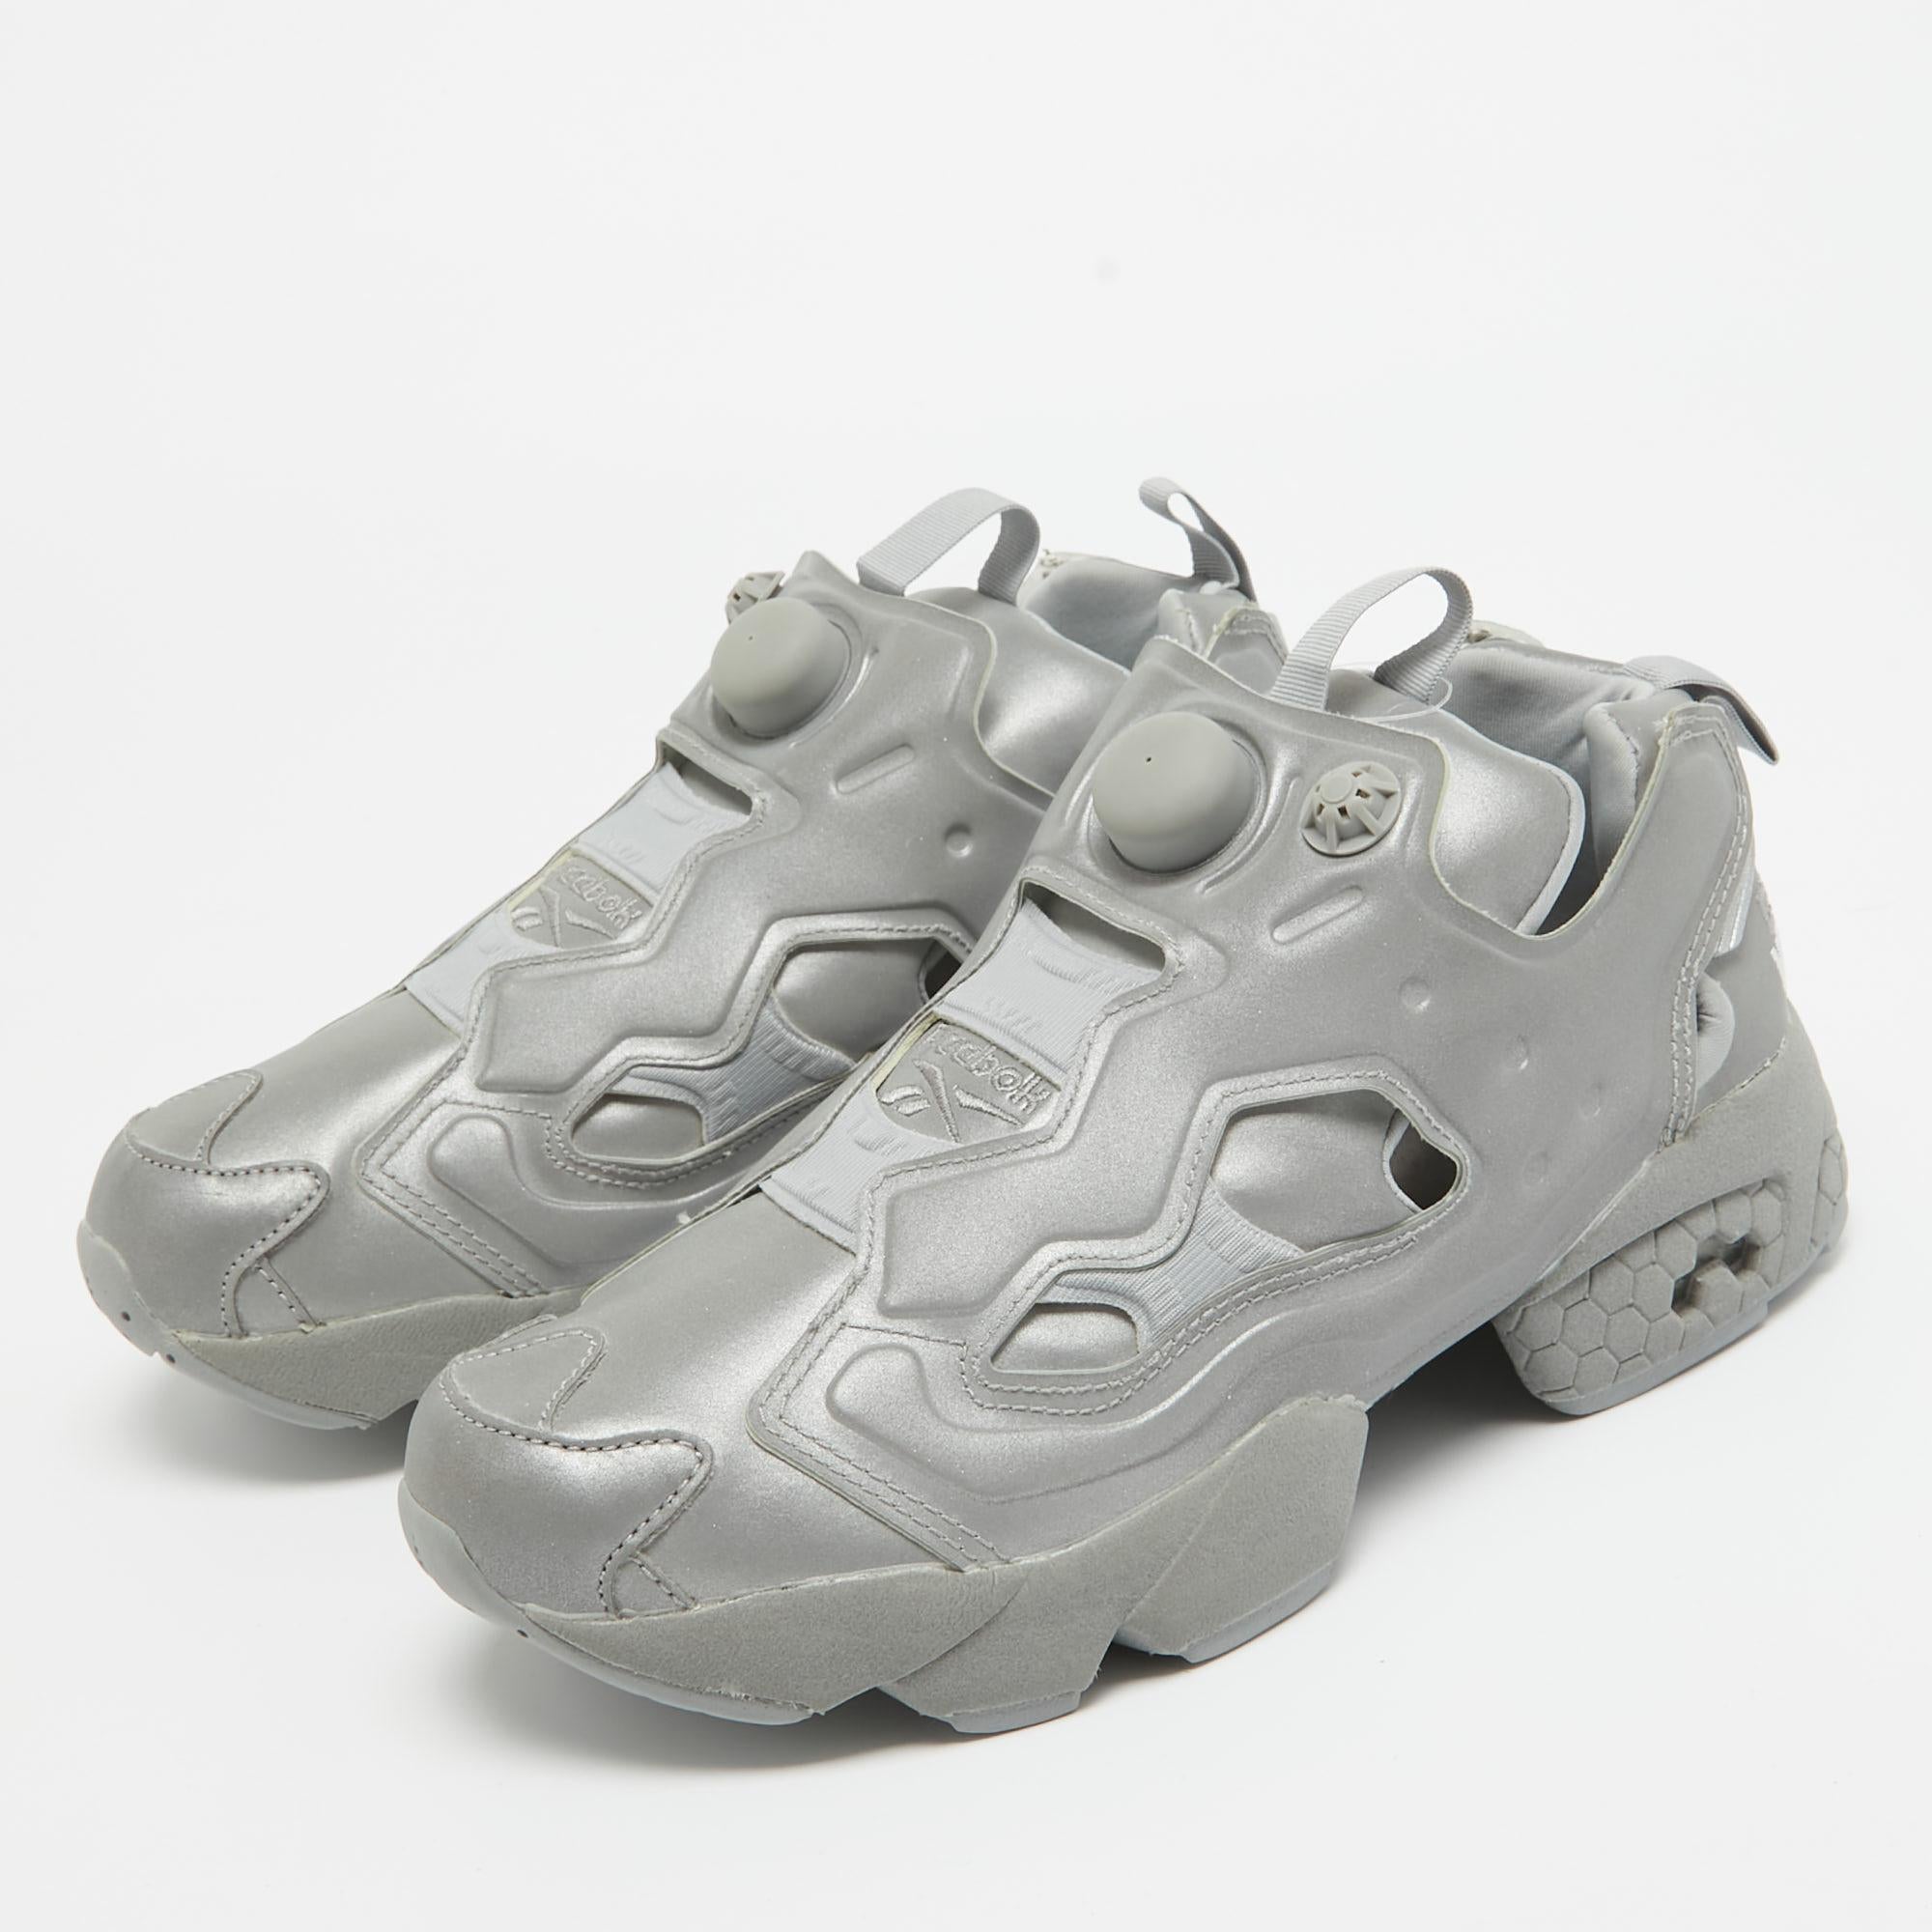 Vetements x Reebok Grey Reflective Fabric Instapump Fury Sneakers Size 38.5 For Sale 1